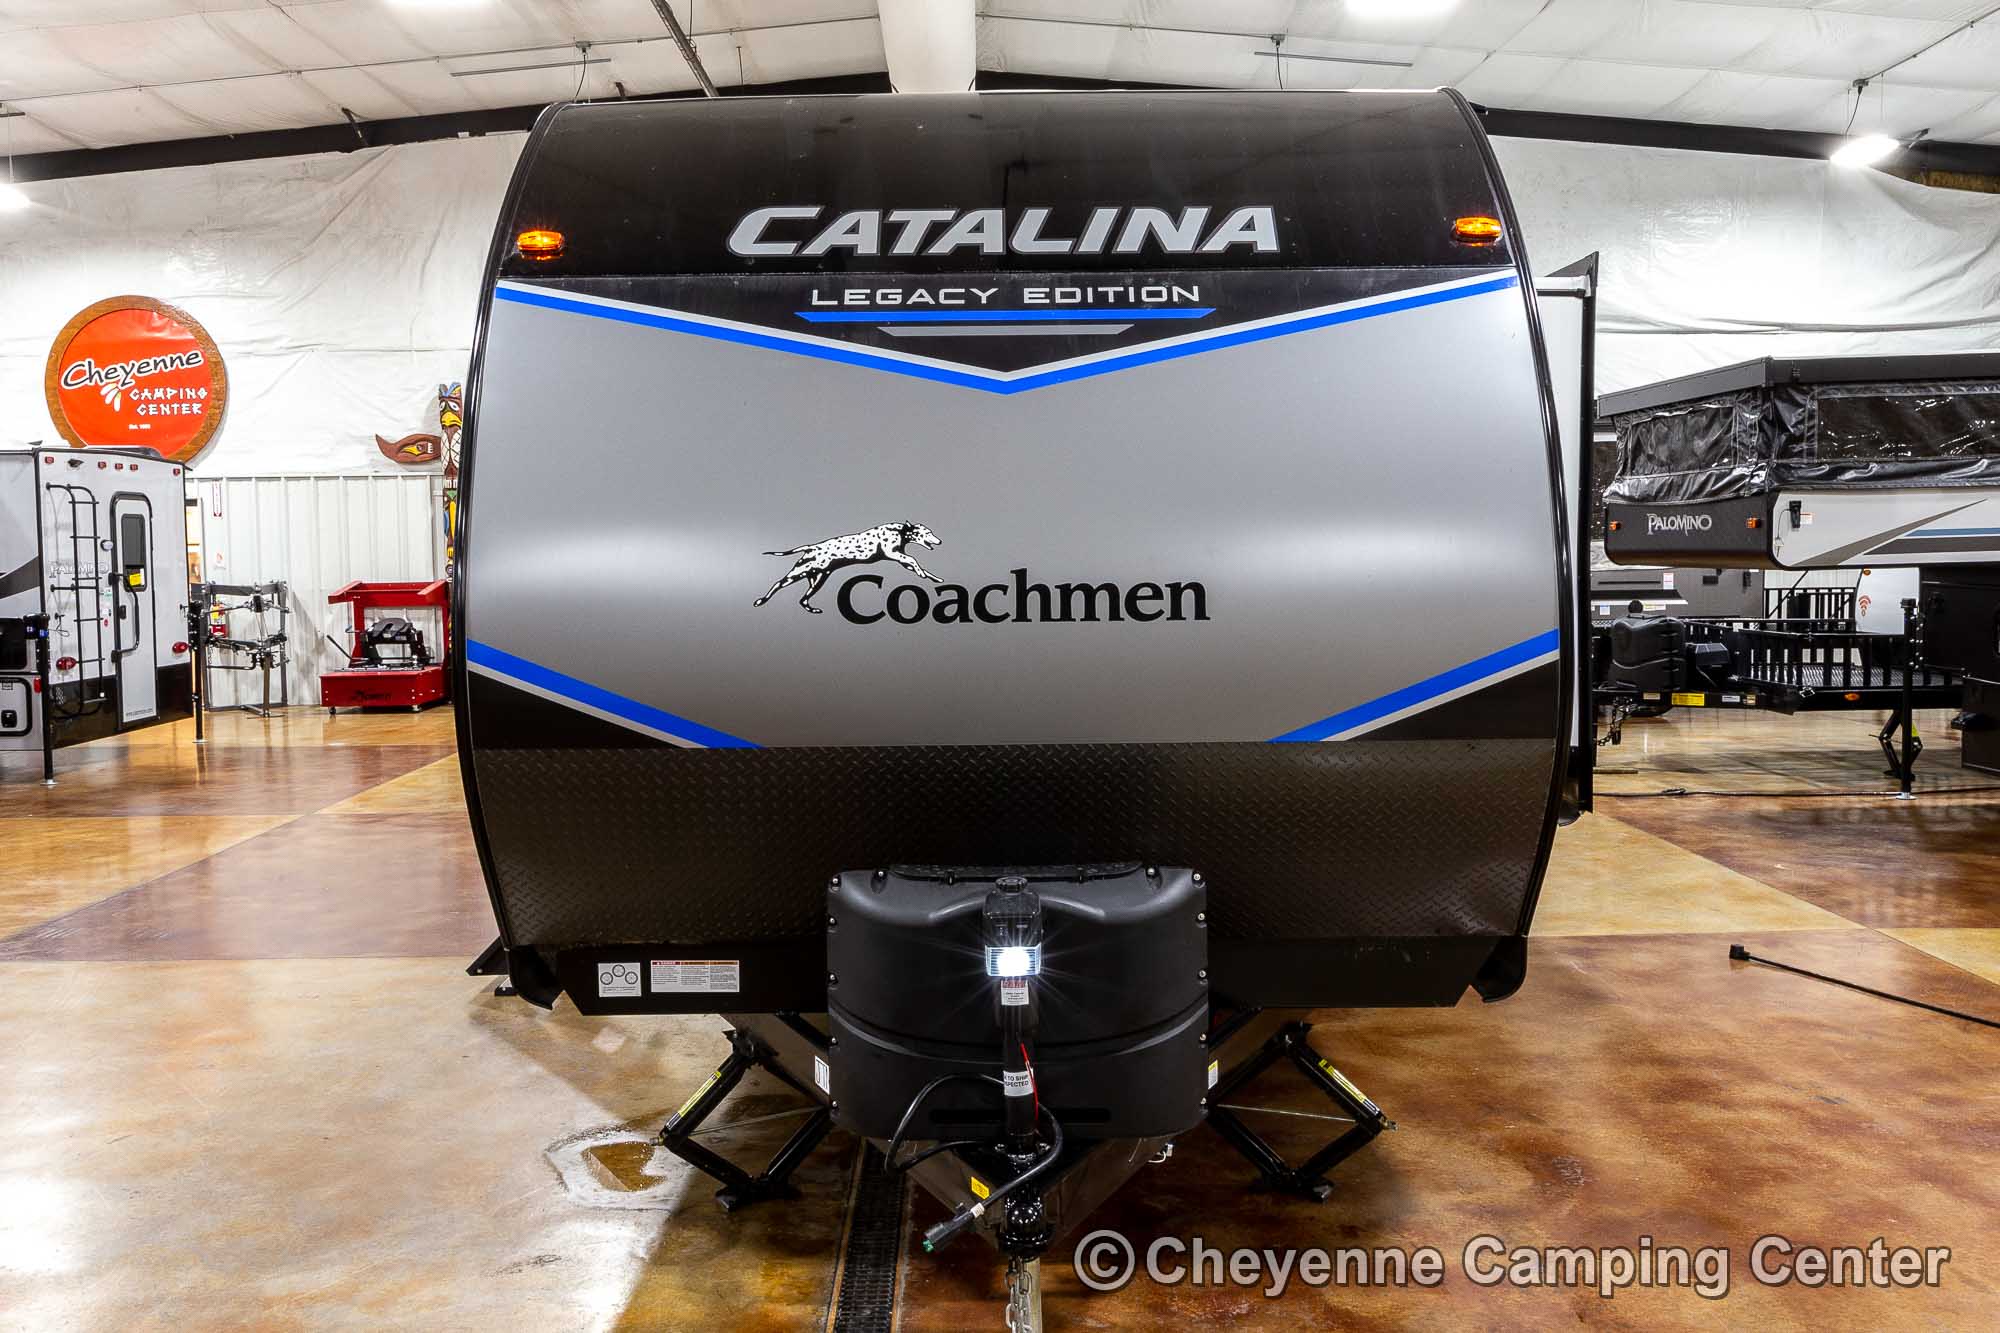 2022 Coachmen Catalina Legacy Edition 243RBS Travel Trailer Exterior Image